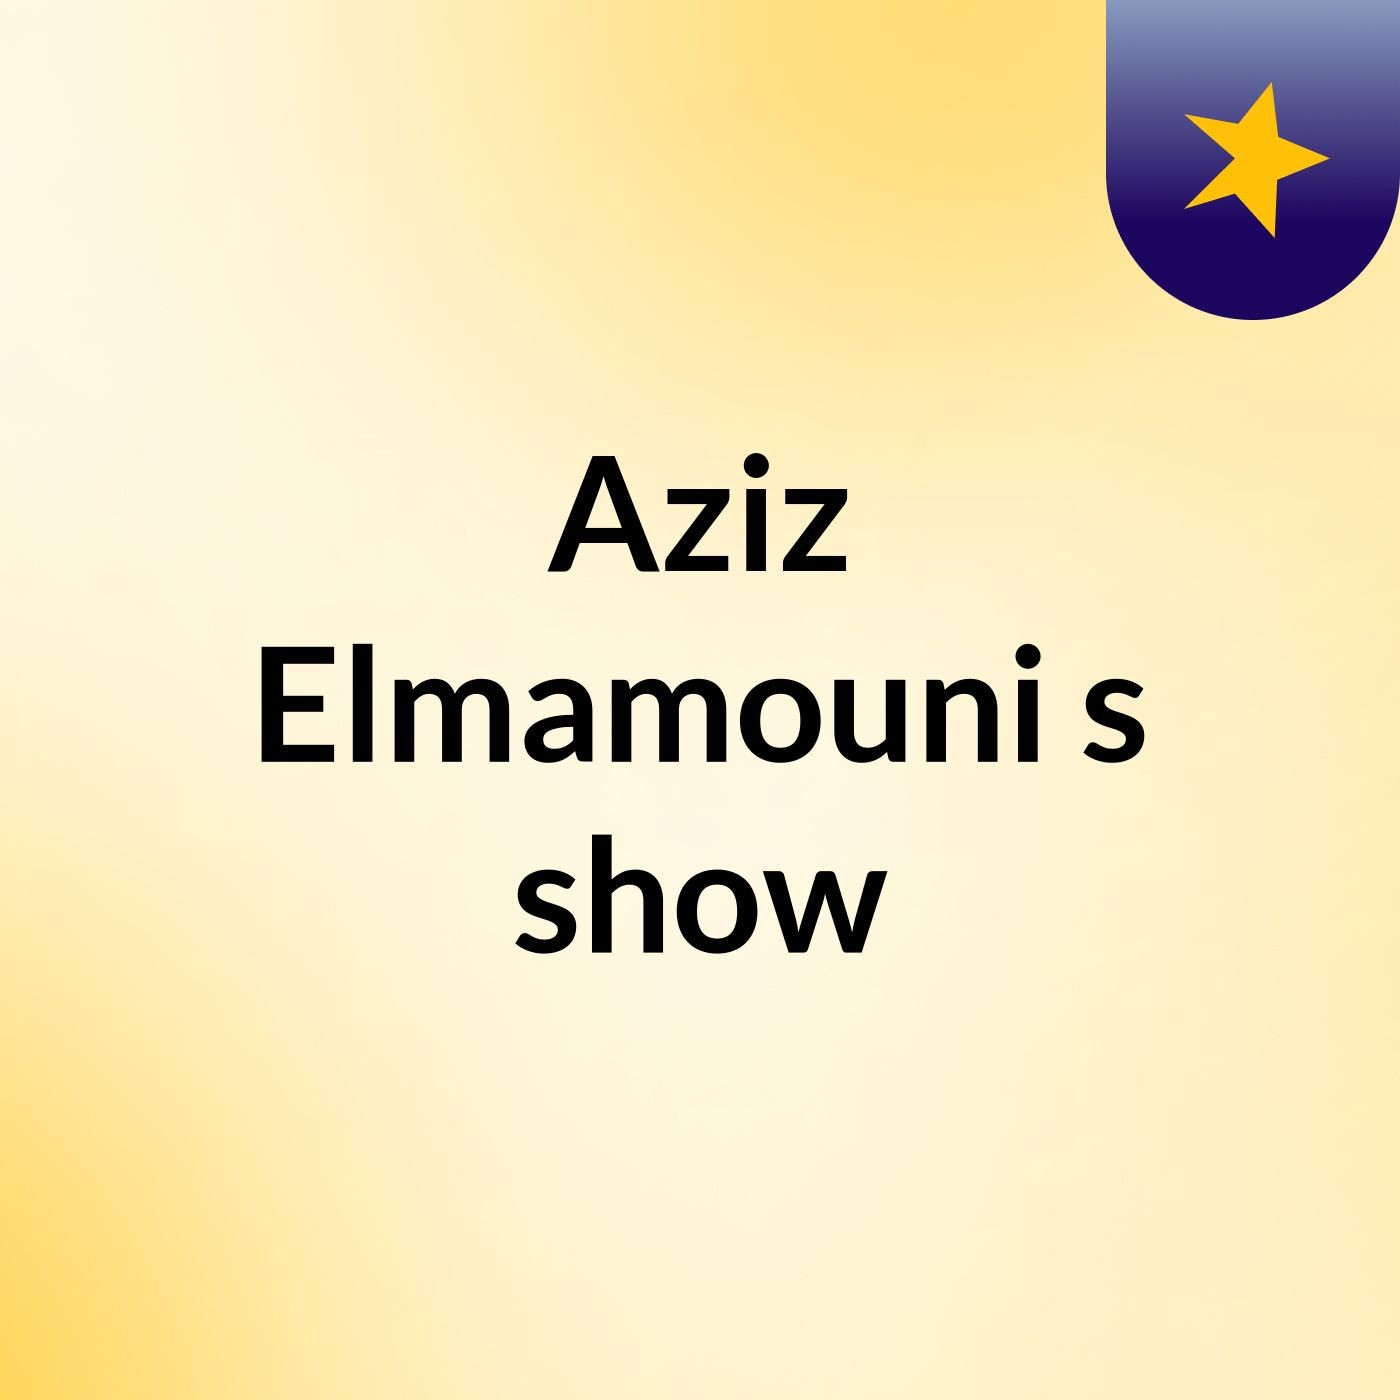 Episode 2 - Aziz Elmamouni's show